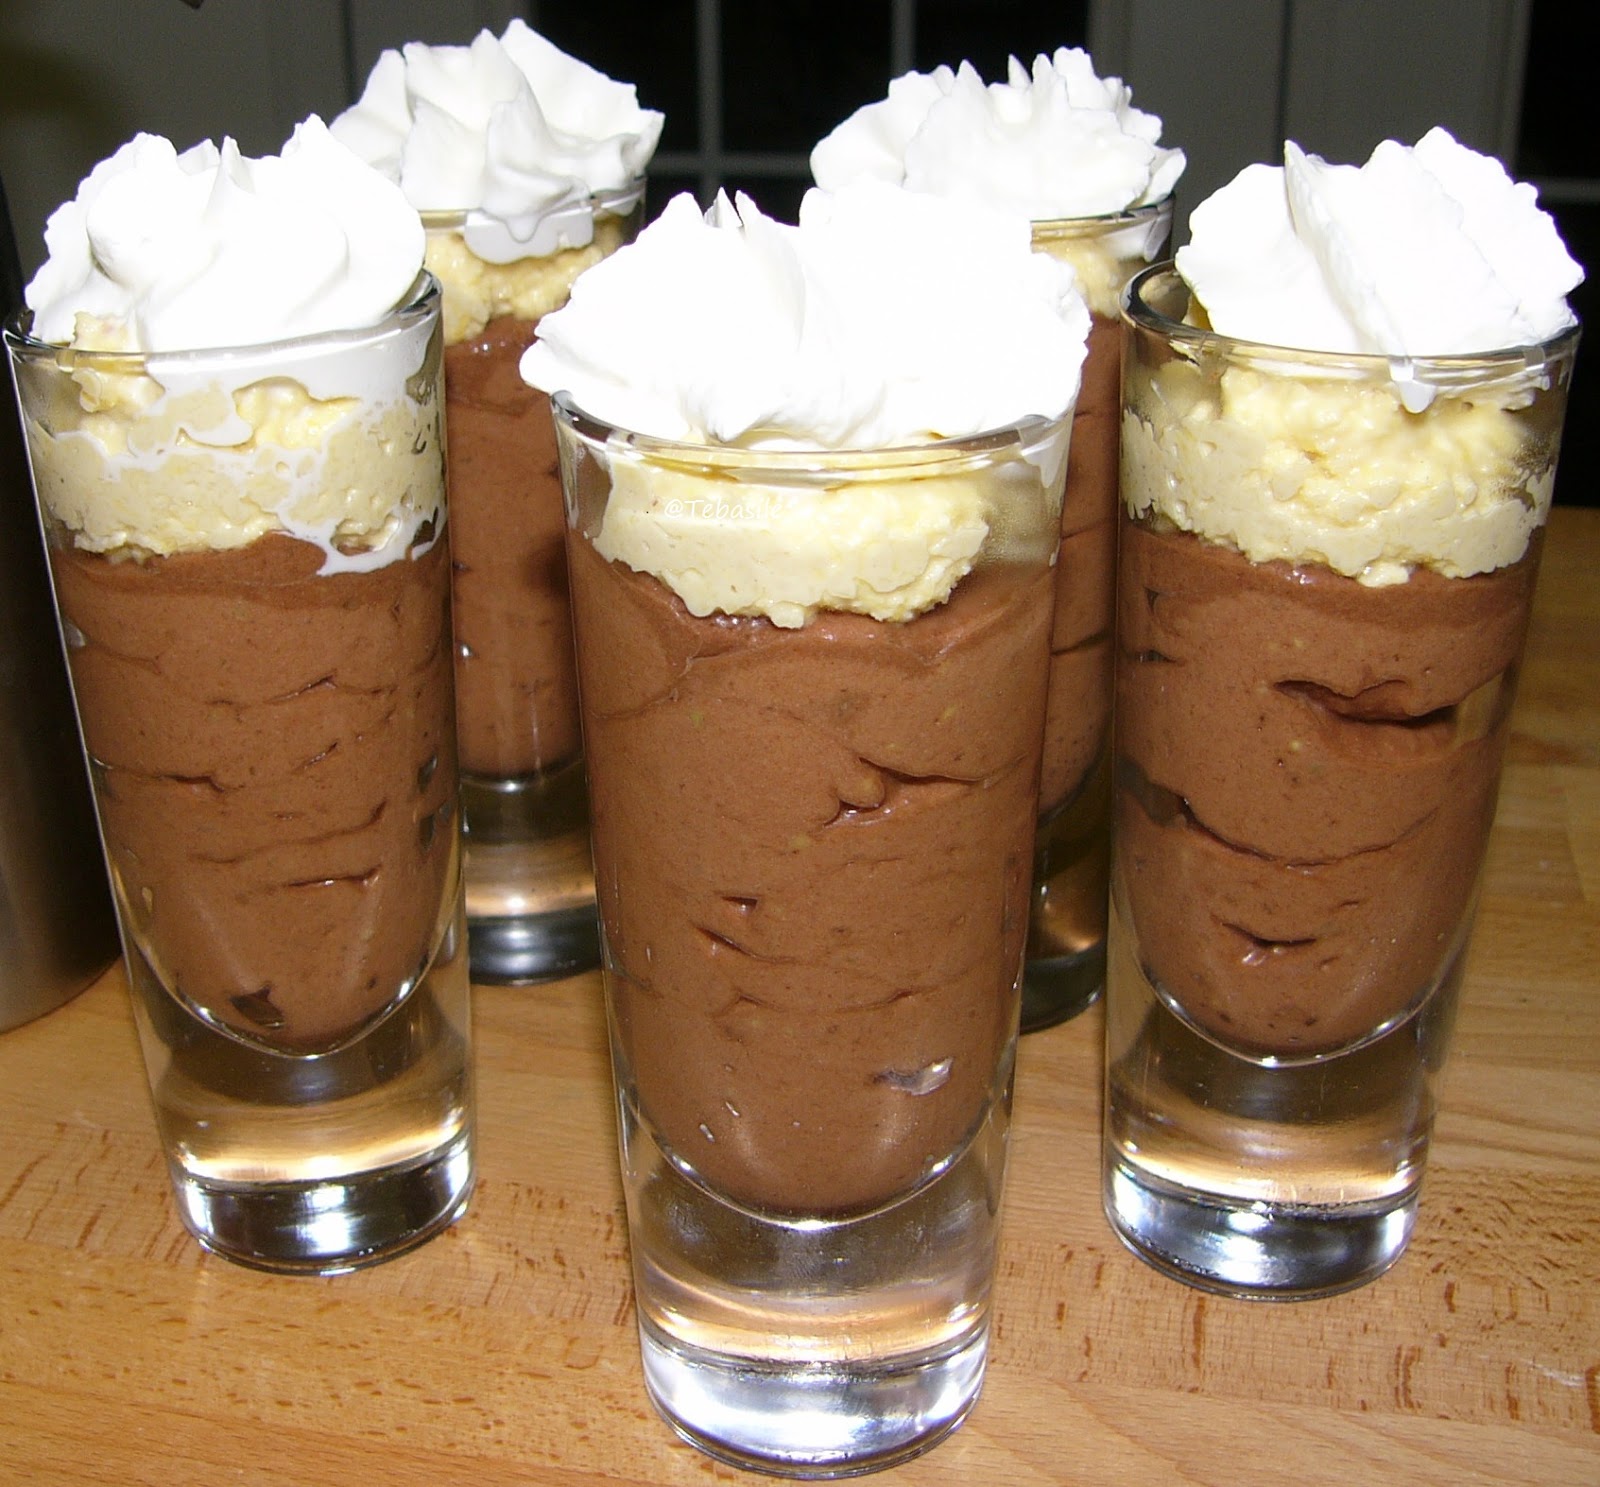 Tebasiles Kitchen: Raw Chocolate Pudding